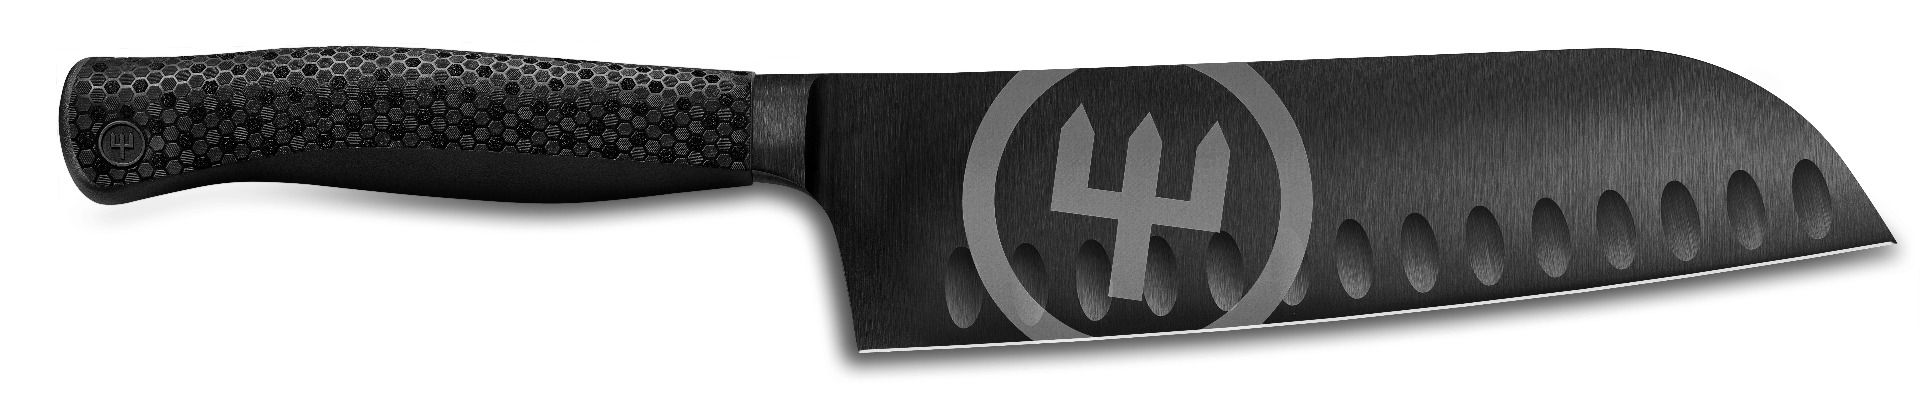 Wusthof Performer coltello Santoku 17 cm rivestimento in DLC